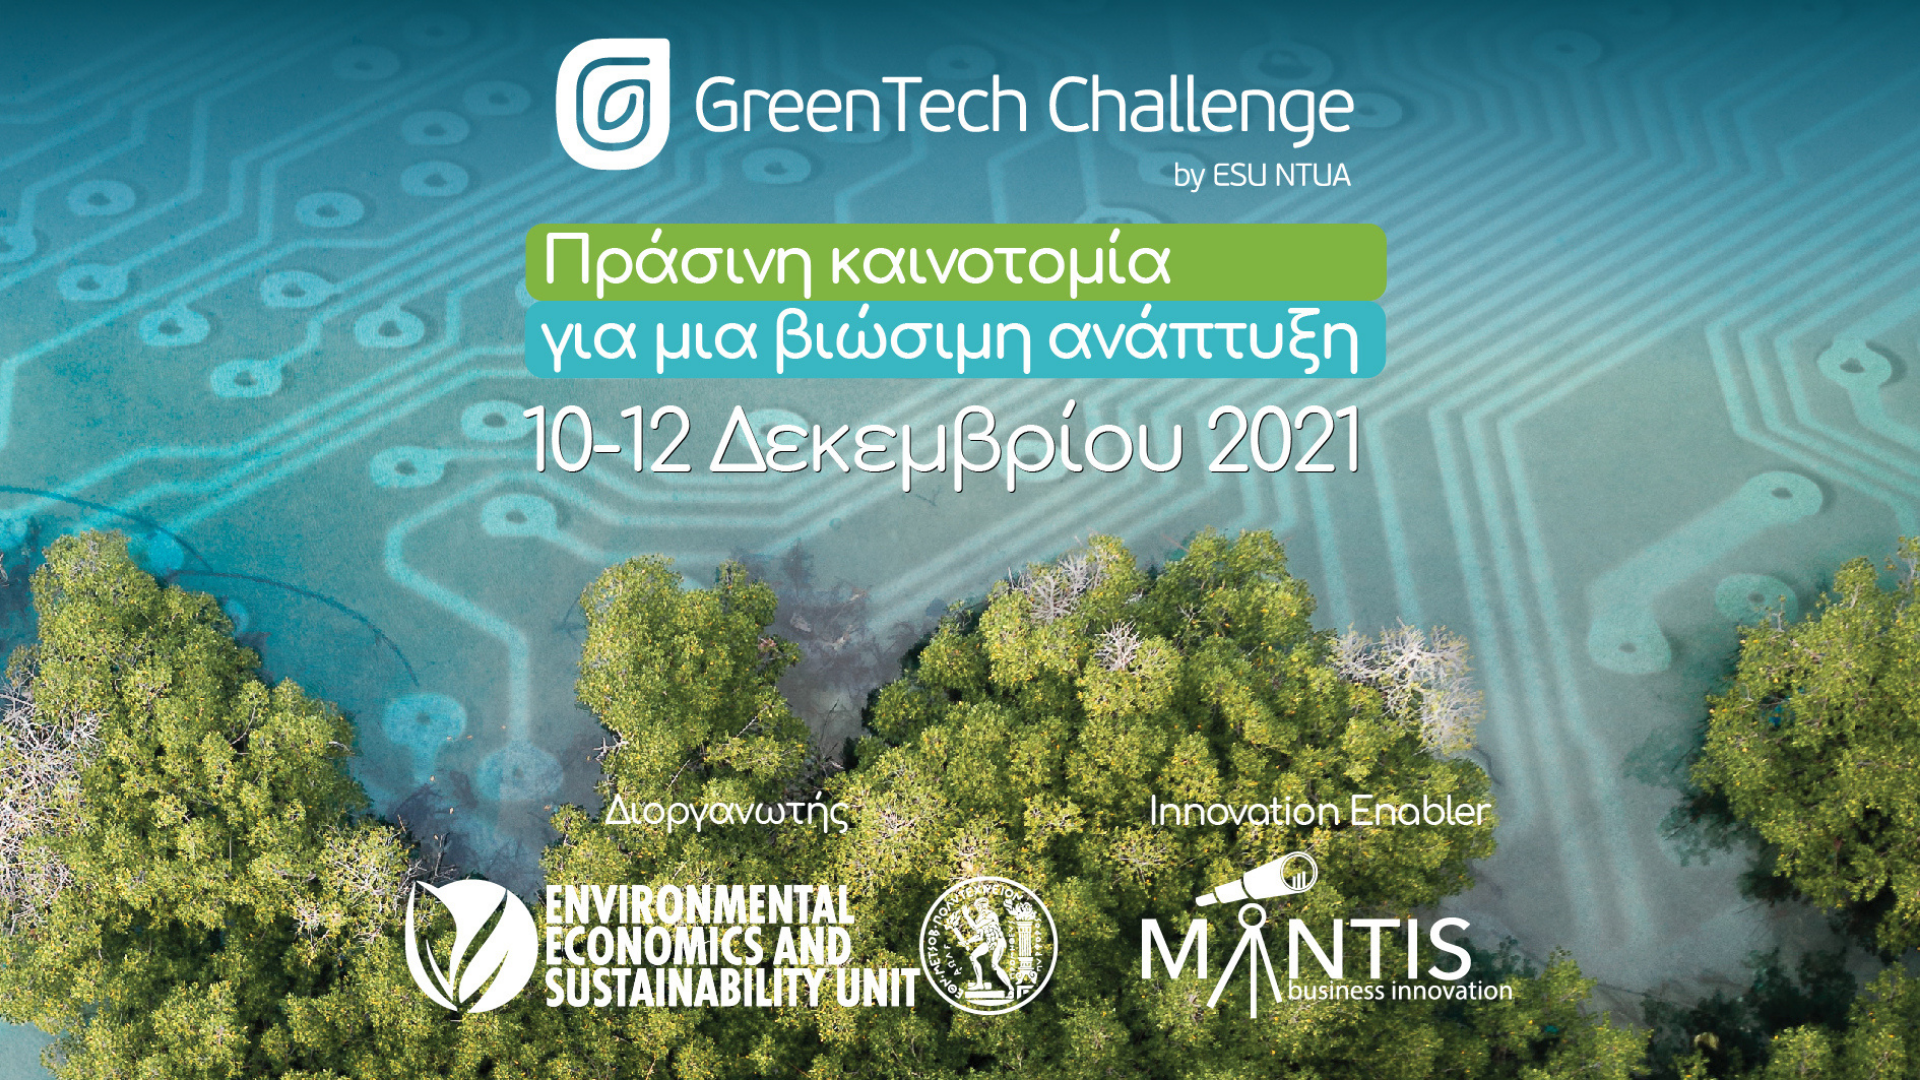 GreenTech Challenge